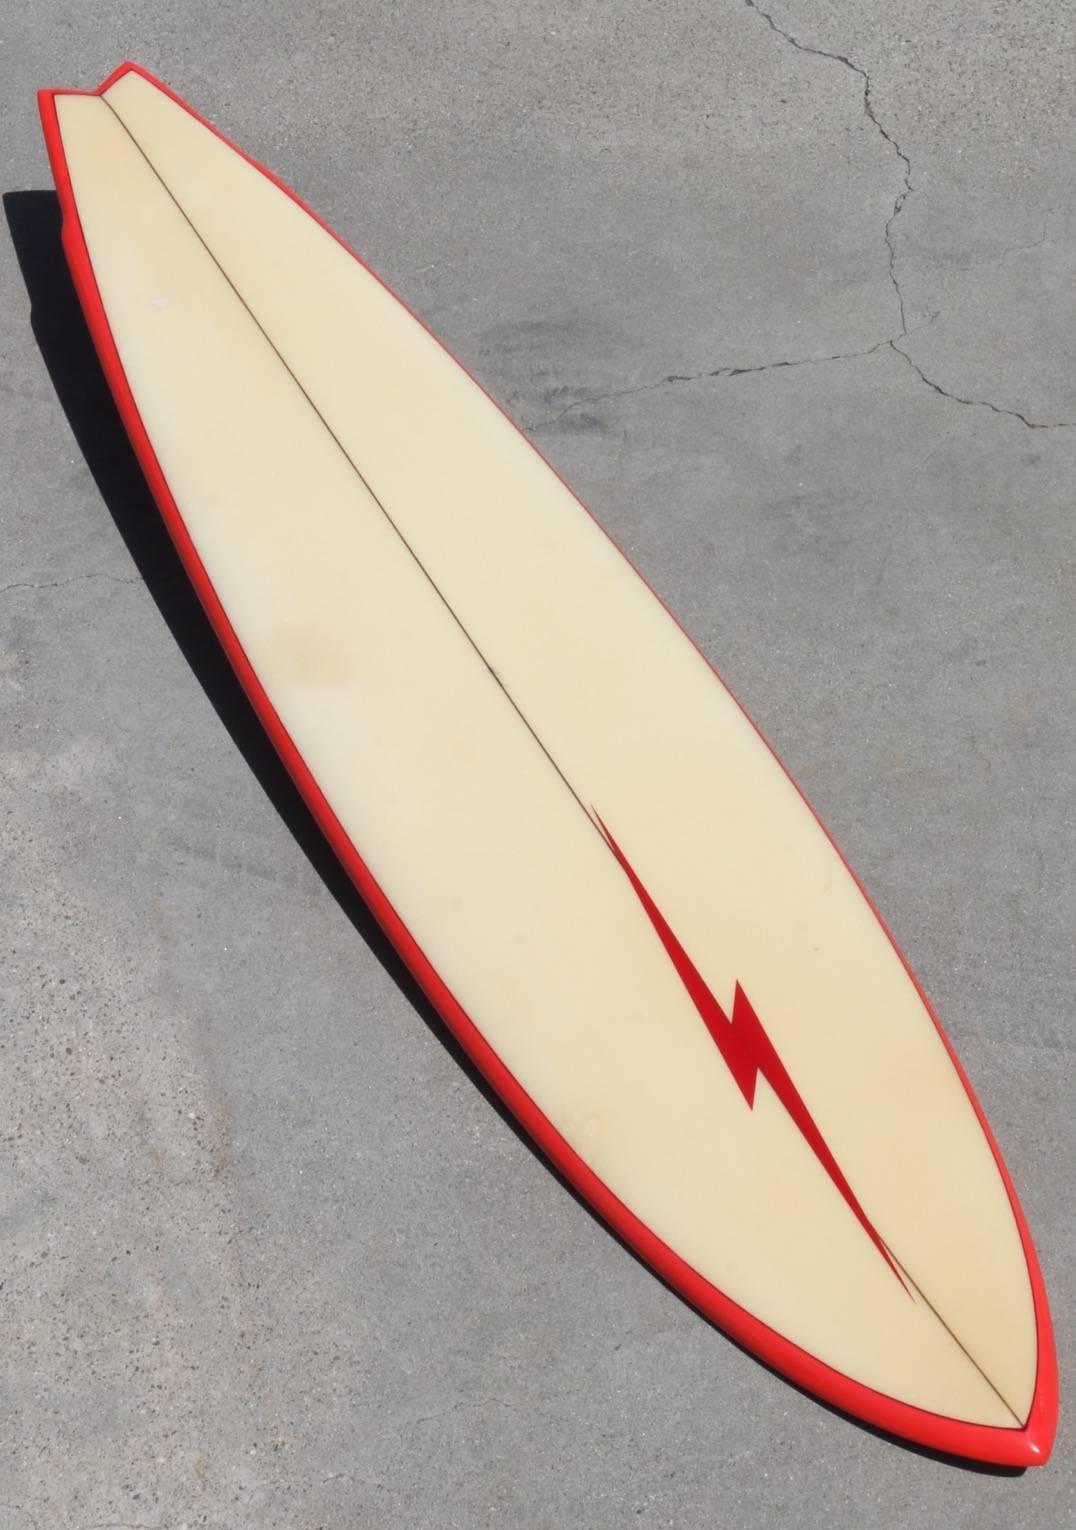 Lightning Bolt Surfboard circa 1975 Shaped by Terry Martin 1